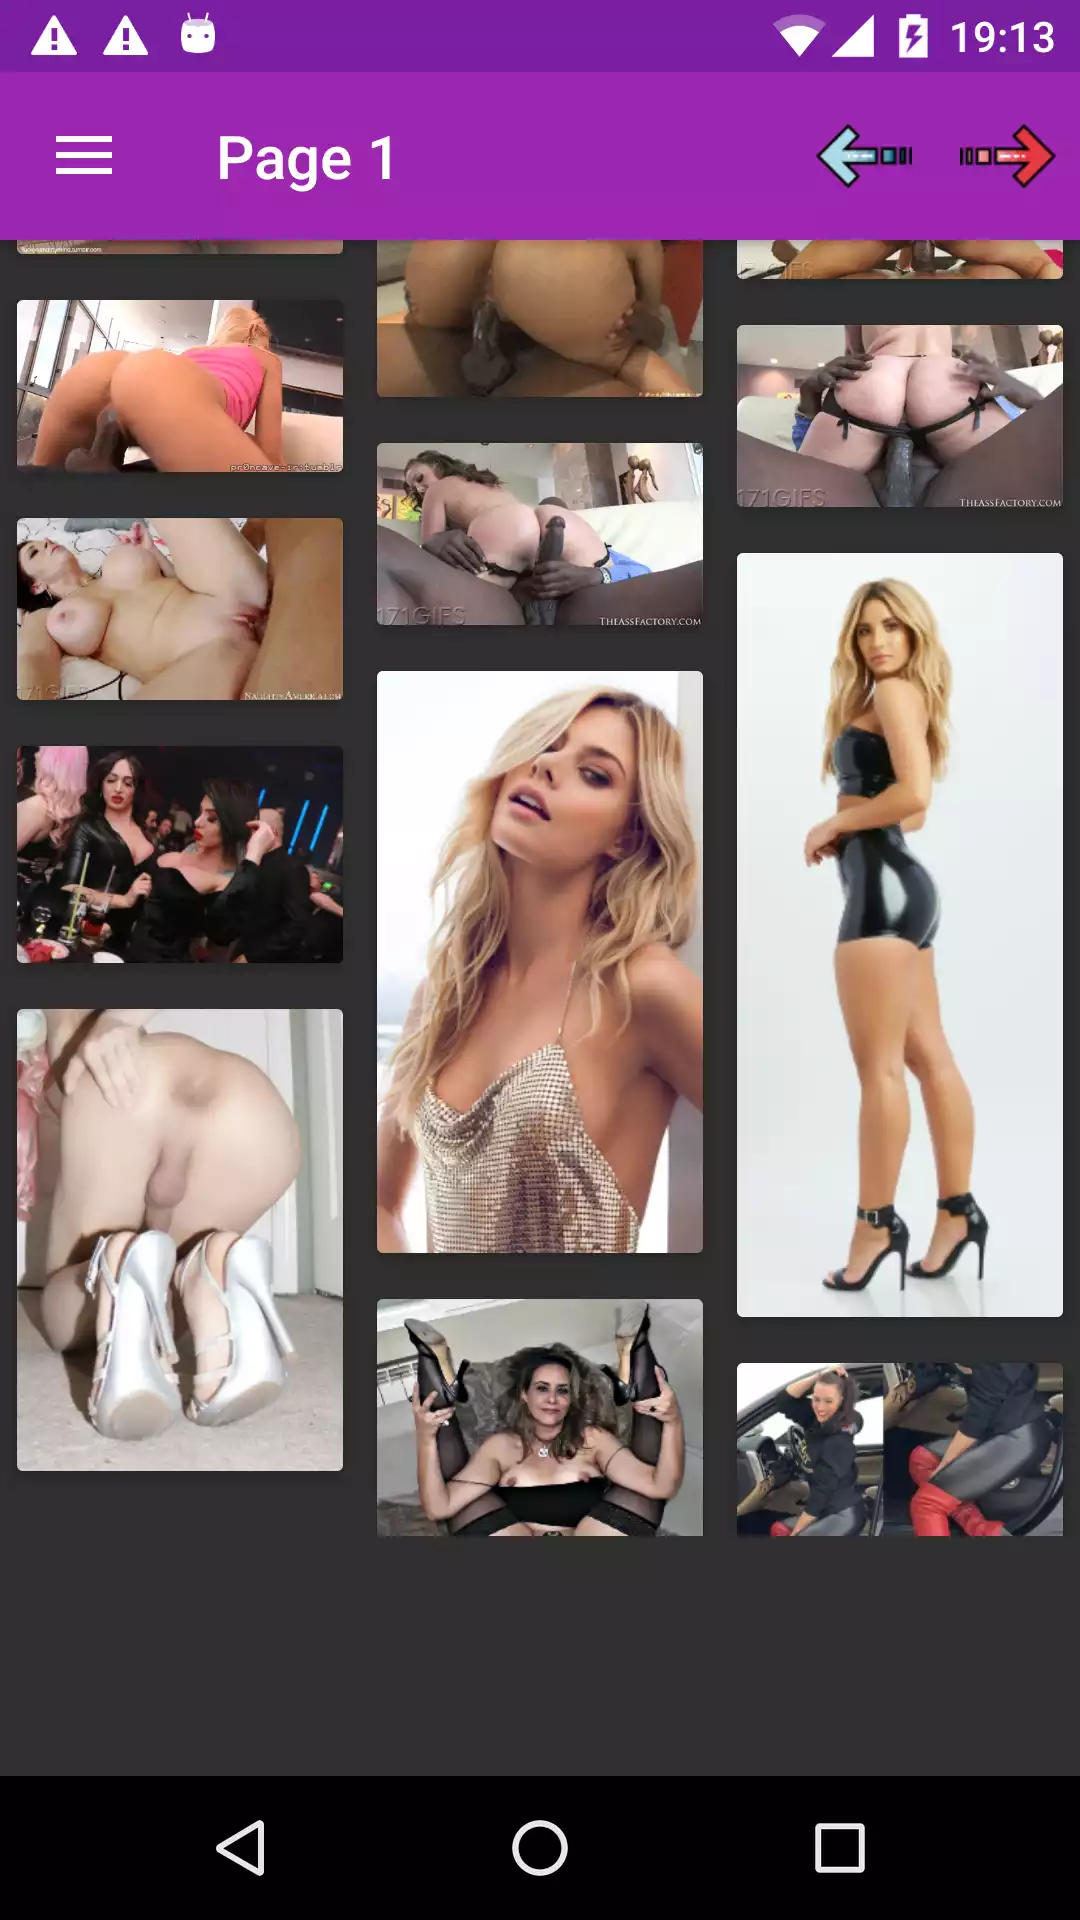 Sexy Group Sex Pics download,hentai,hebtai,apps,henati,gallery,pics,futanari,galleries,pictures,viewer,appa,app,porn,sexy,pornstar,henti,photos,android